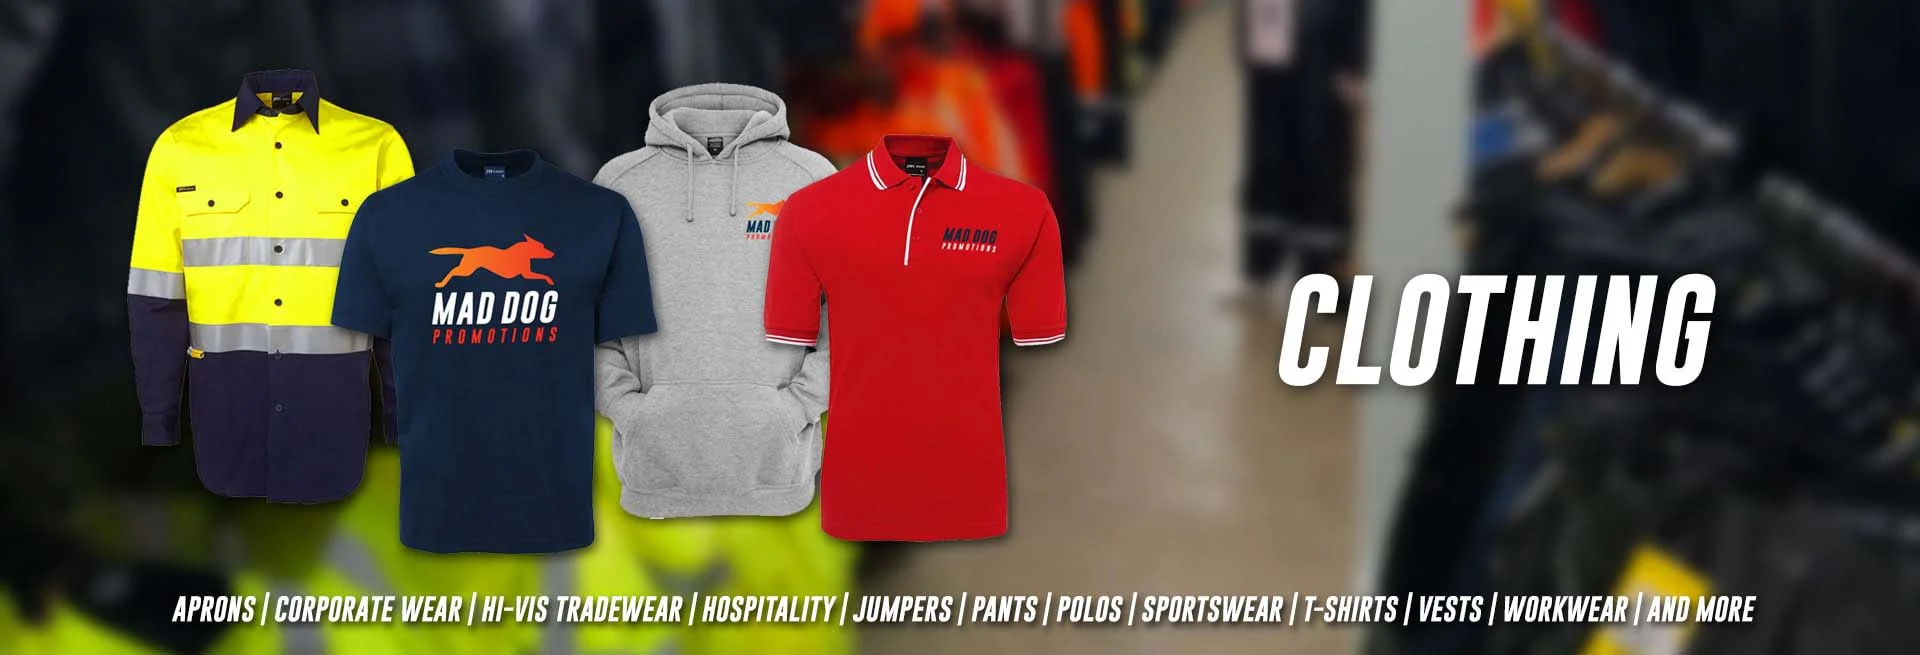 Custom Sportswear Uniforms Online in Perth - Mad Dog Promotions